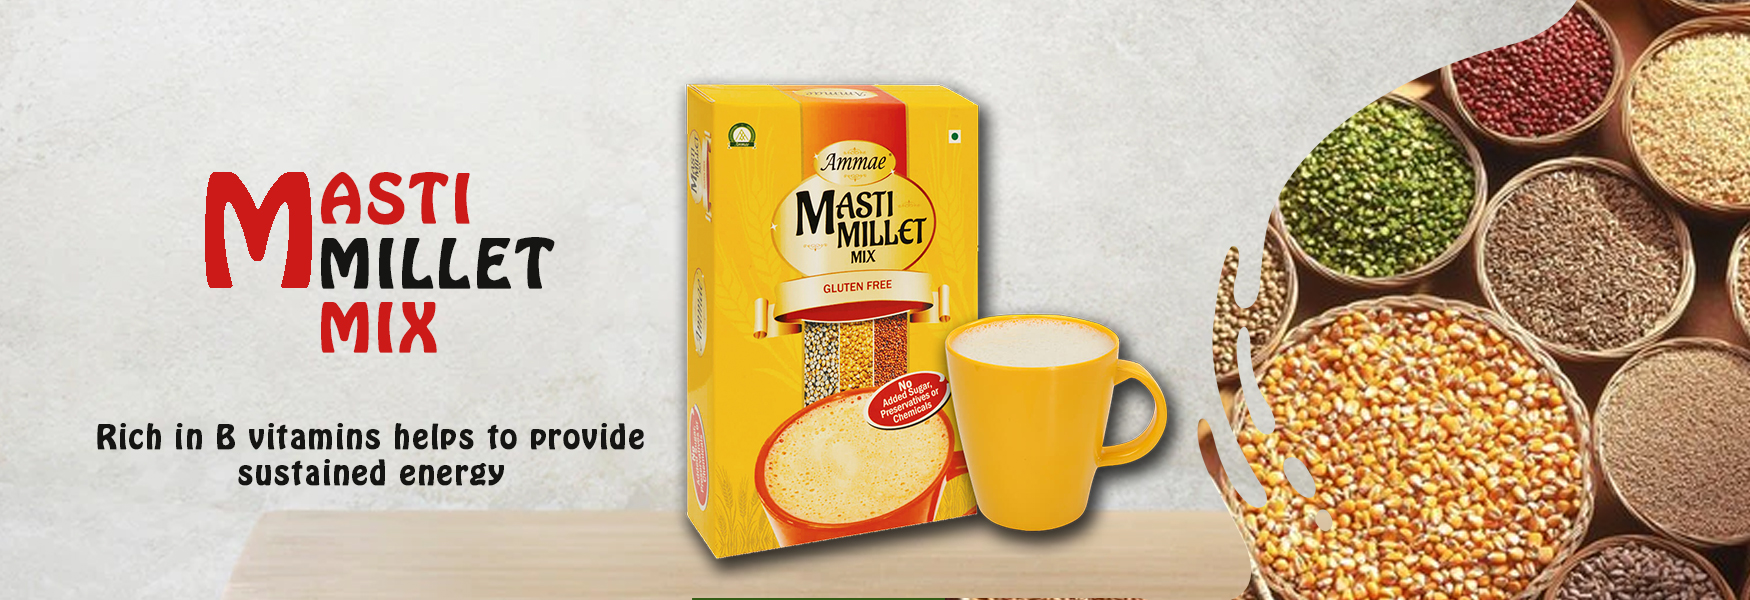 Ammae Masti Millet Mix | Masti Millet Mix - Ammae Foods India